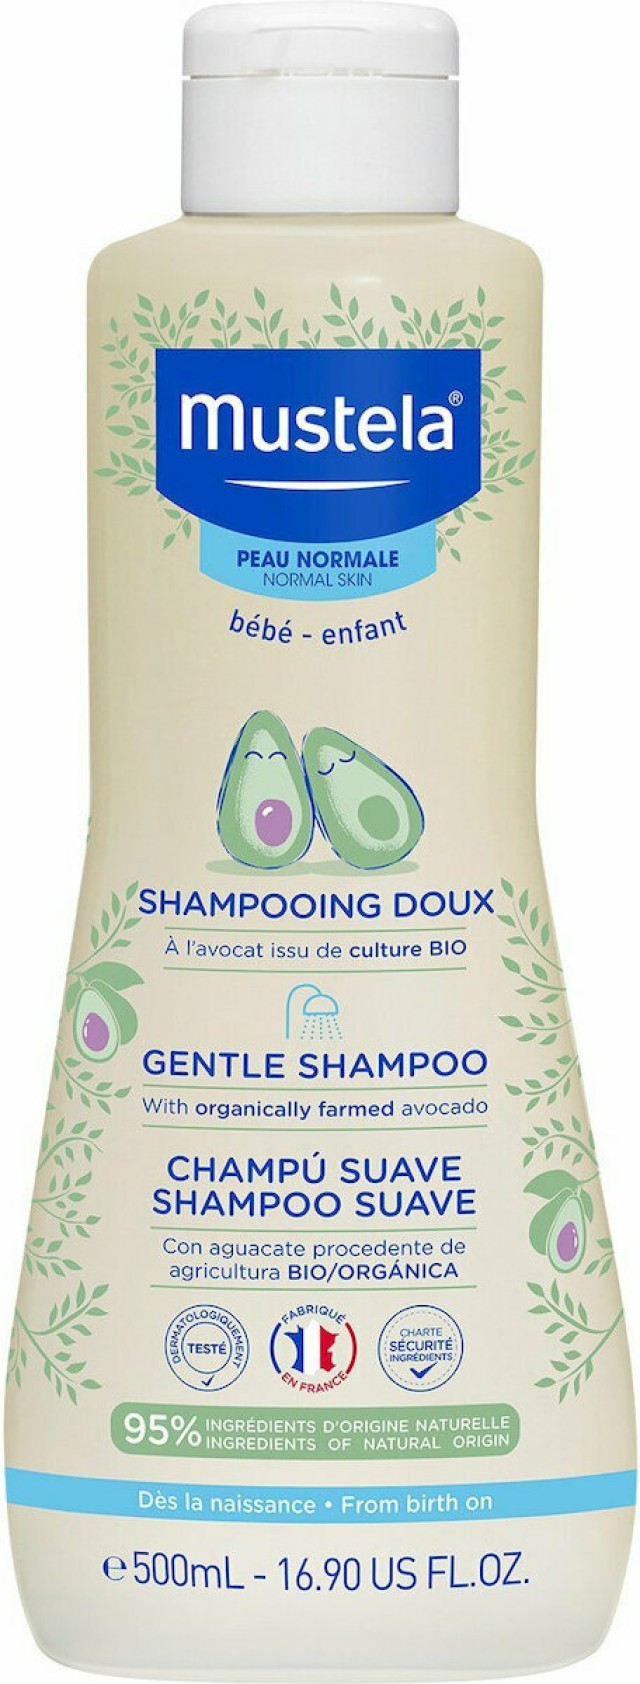 Mustela Gentle Shampoo Απαλό Σαμπουάν με Βιολογικό Αβοκάντο, 500ml